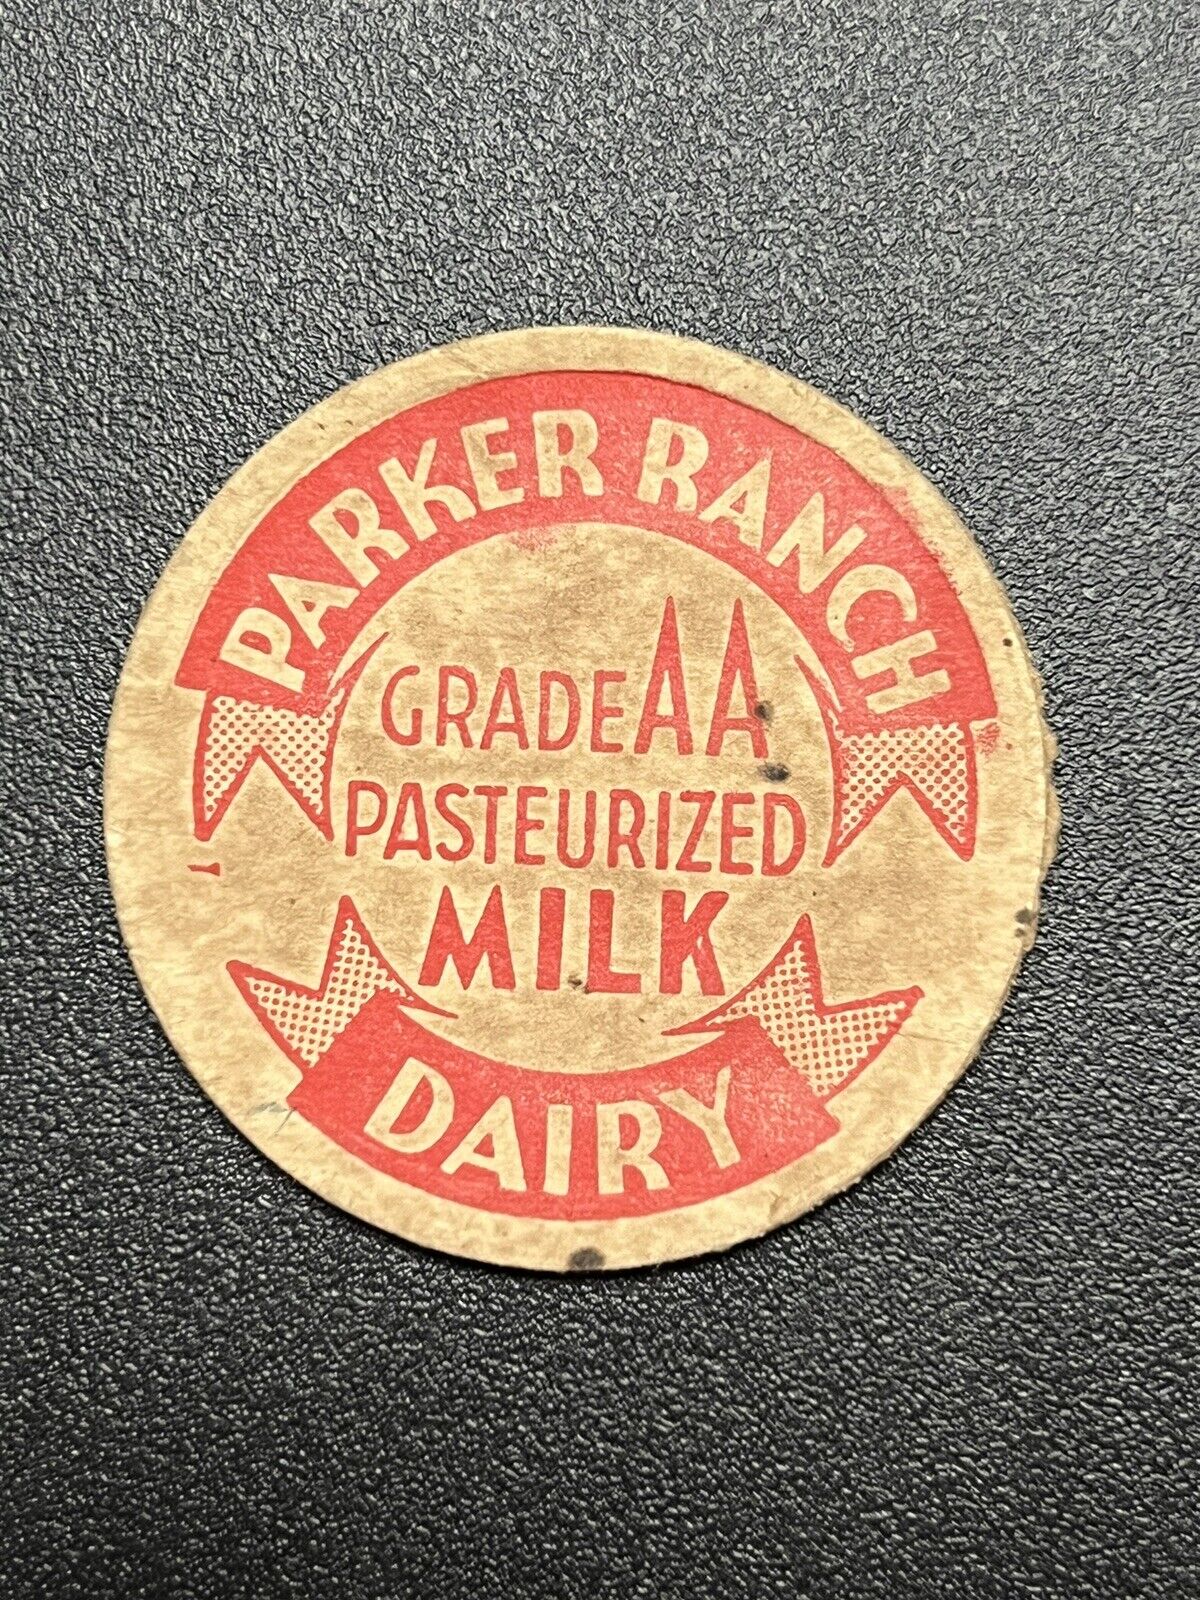 Hawaii Milk Cap - Parker Ranch Dairy Grade AA Pasteurized Milk